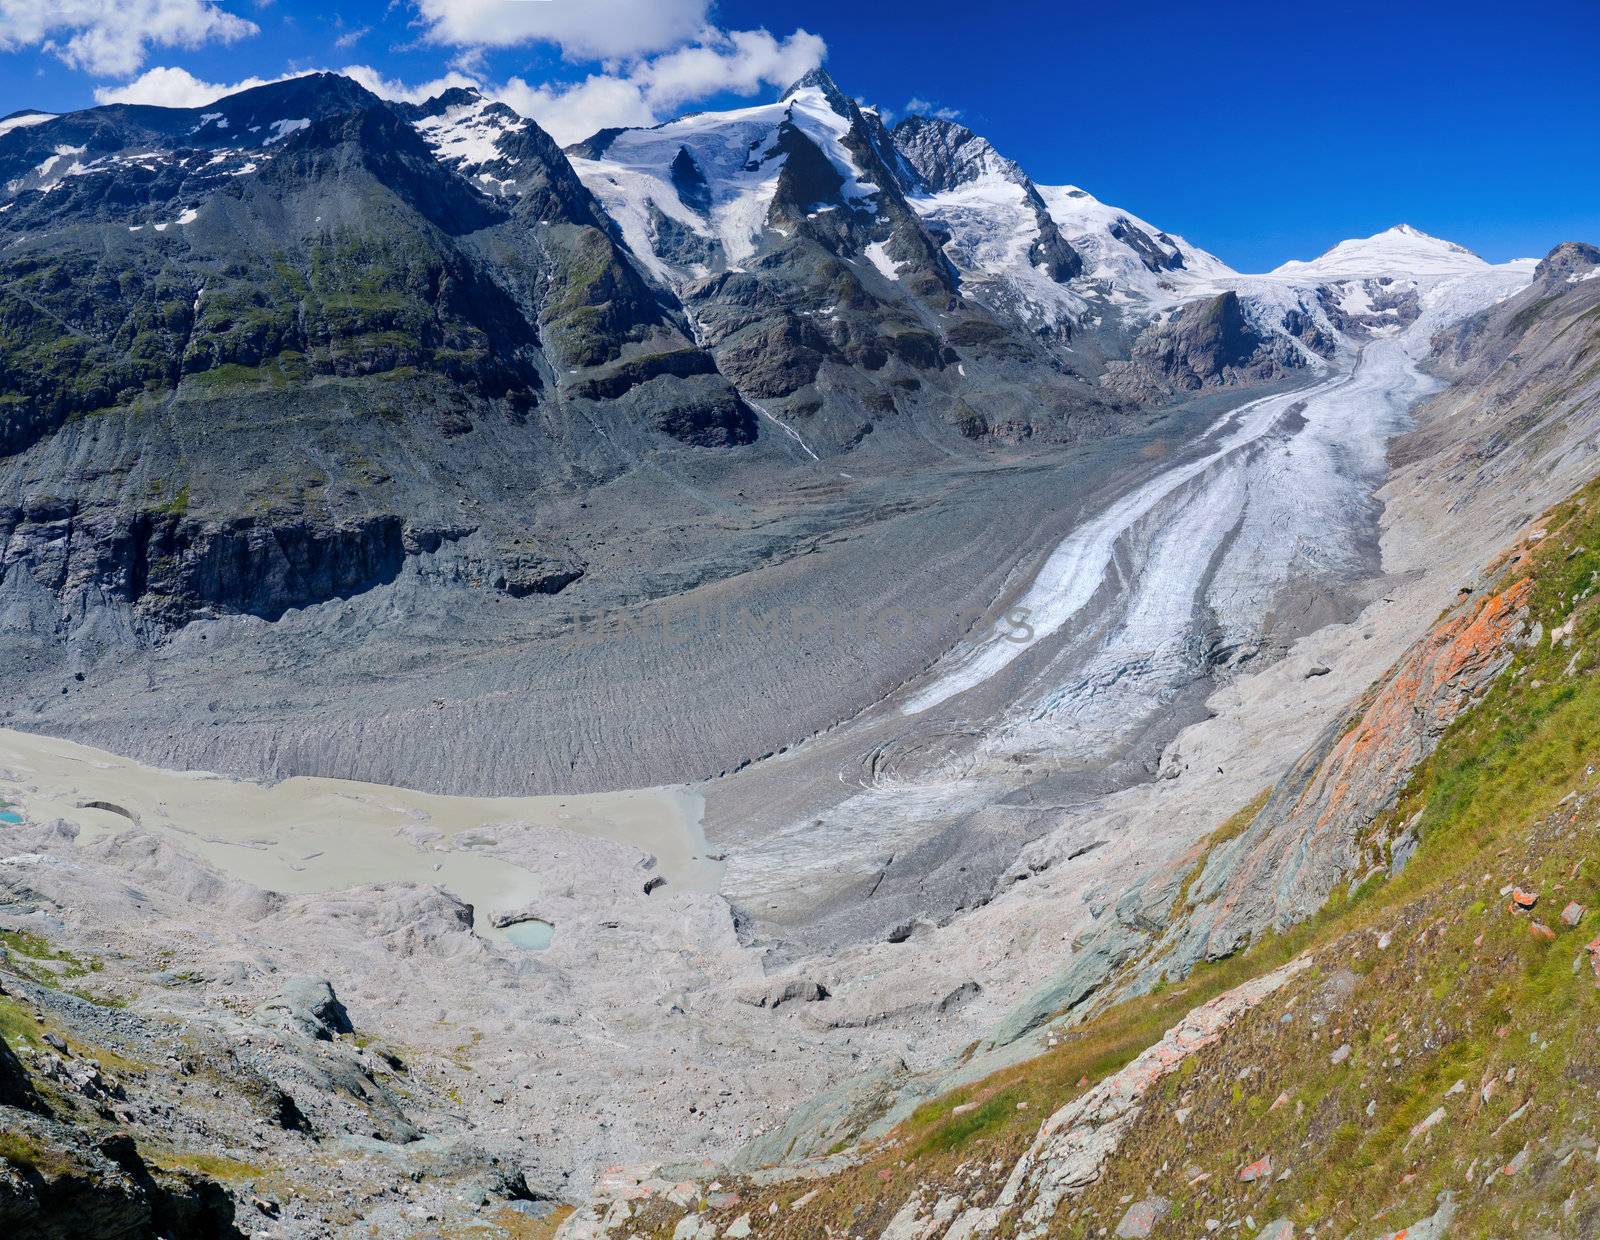 Glacier on Grossglockner. Austria. Panorama by maxoliki